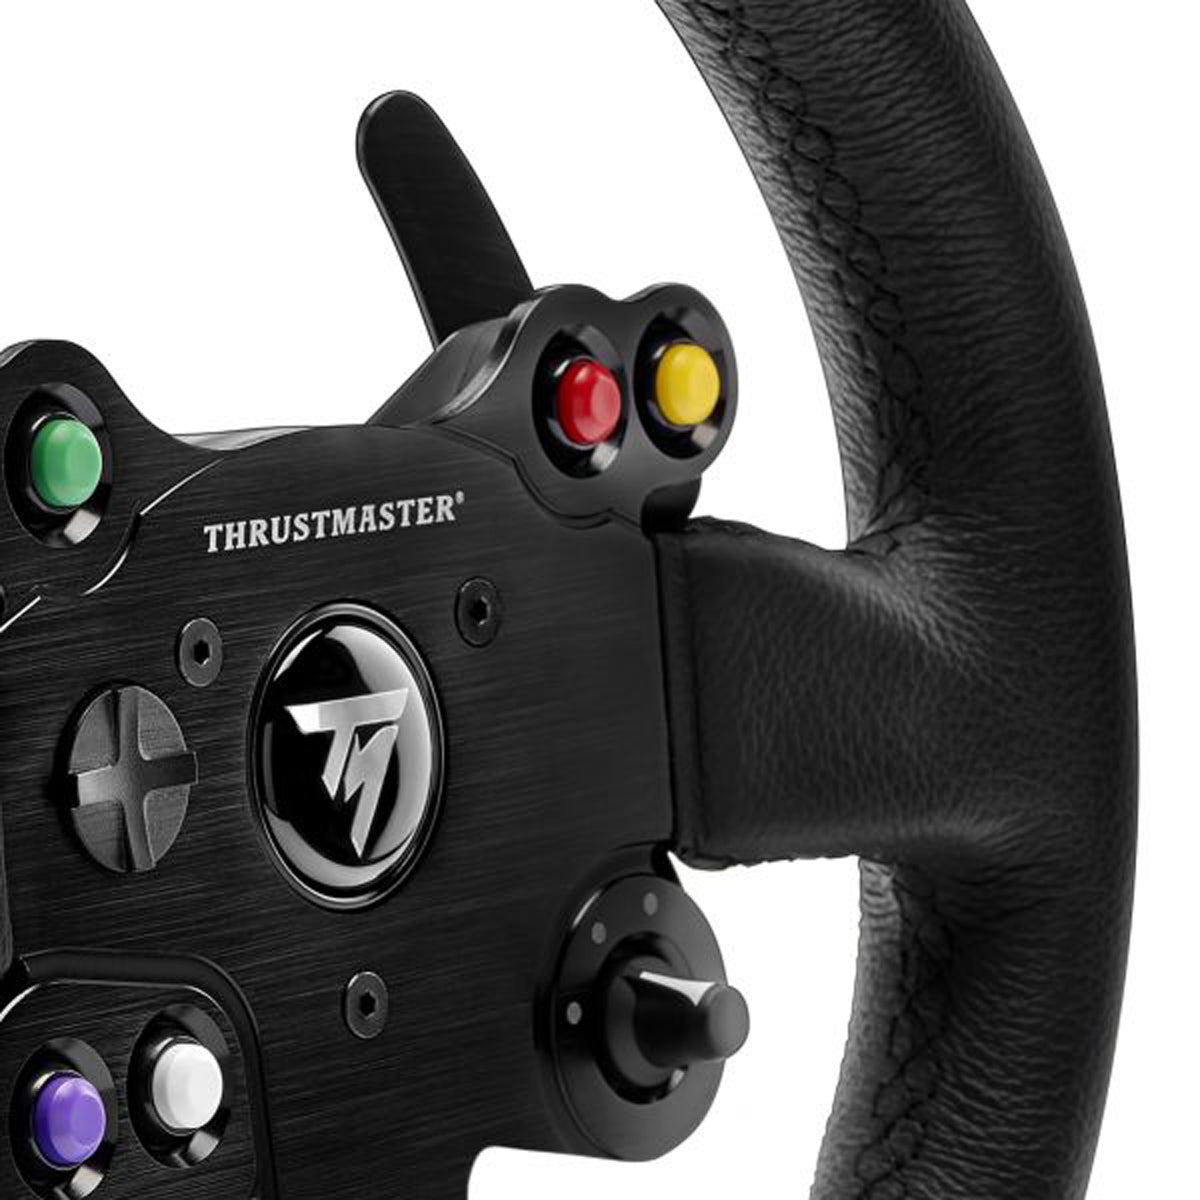 Thrustmaster TM Leather 28 GT Wheel Add-On Racing Wheel.